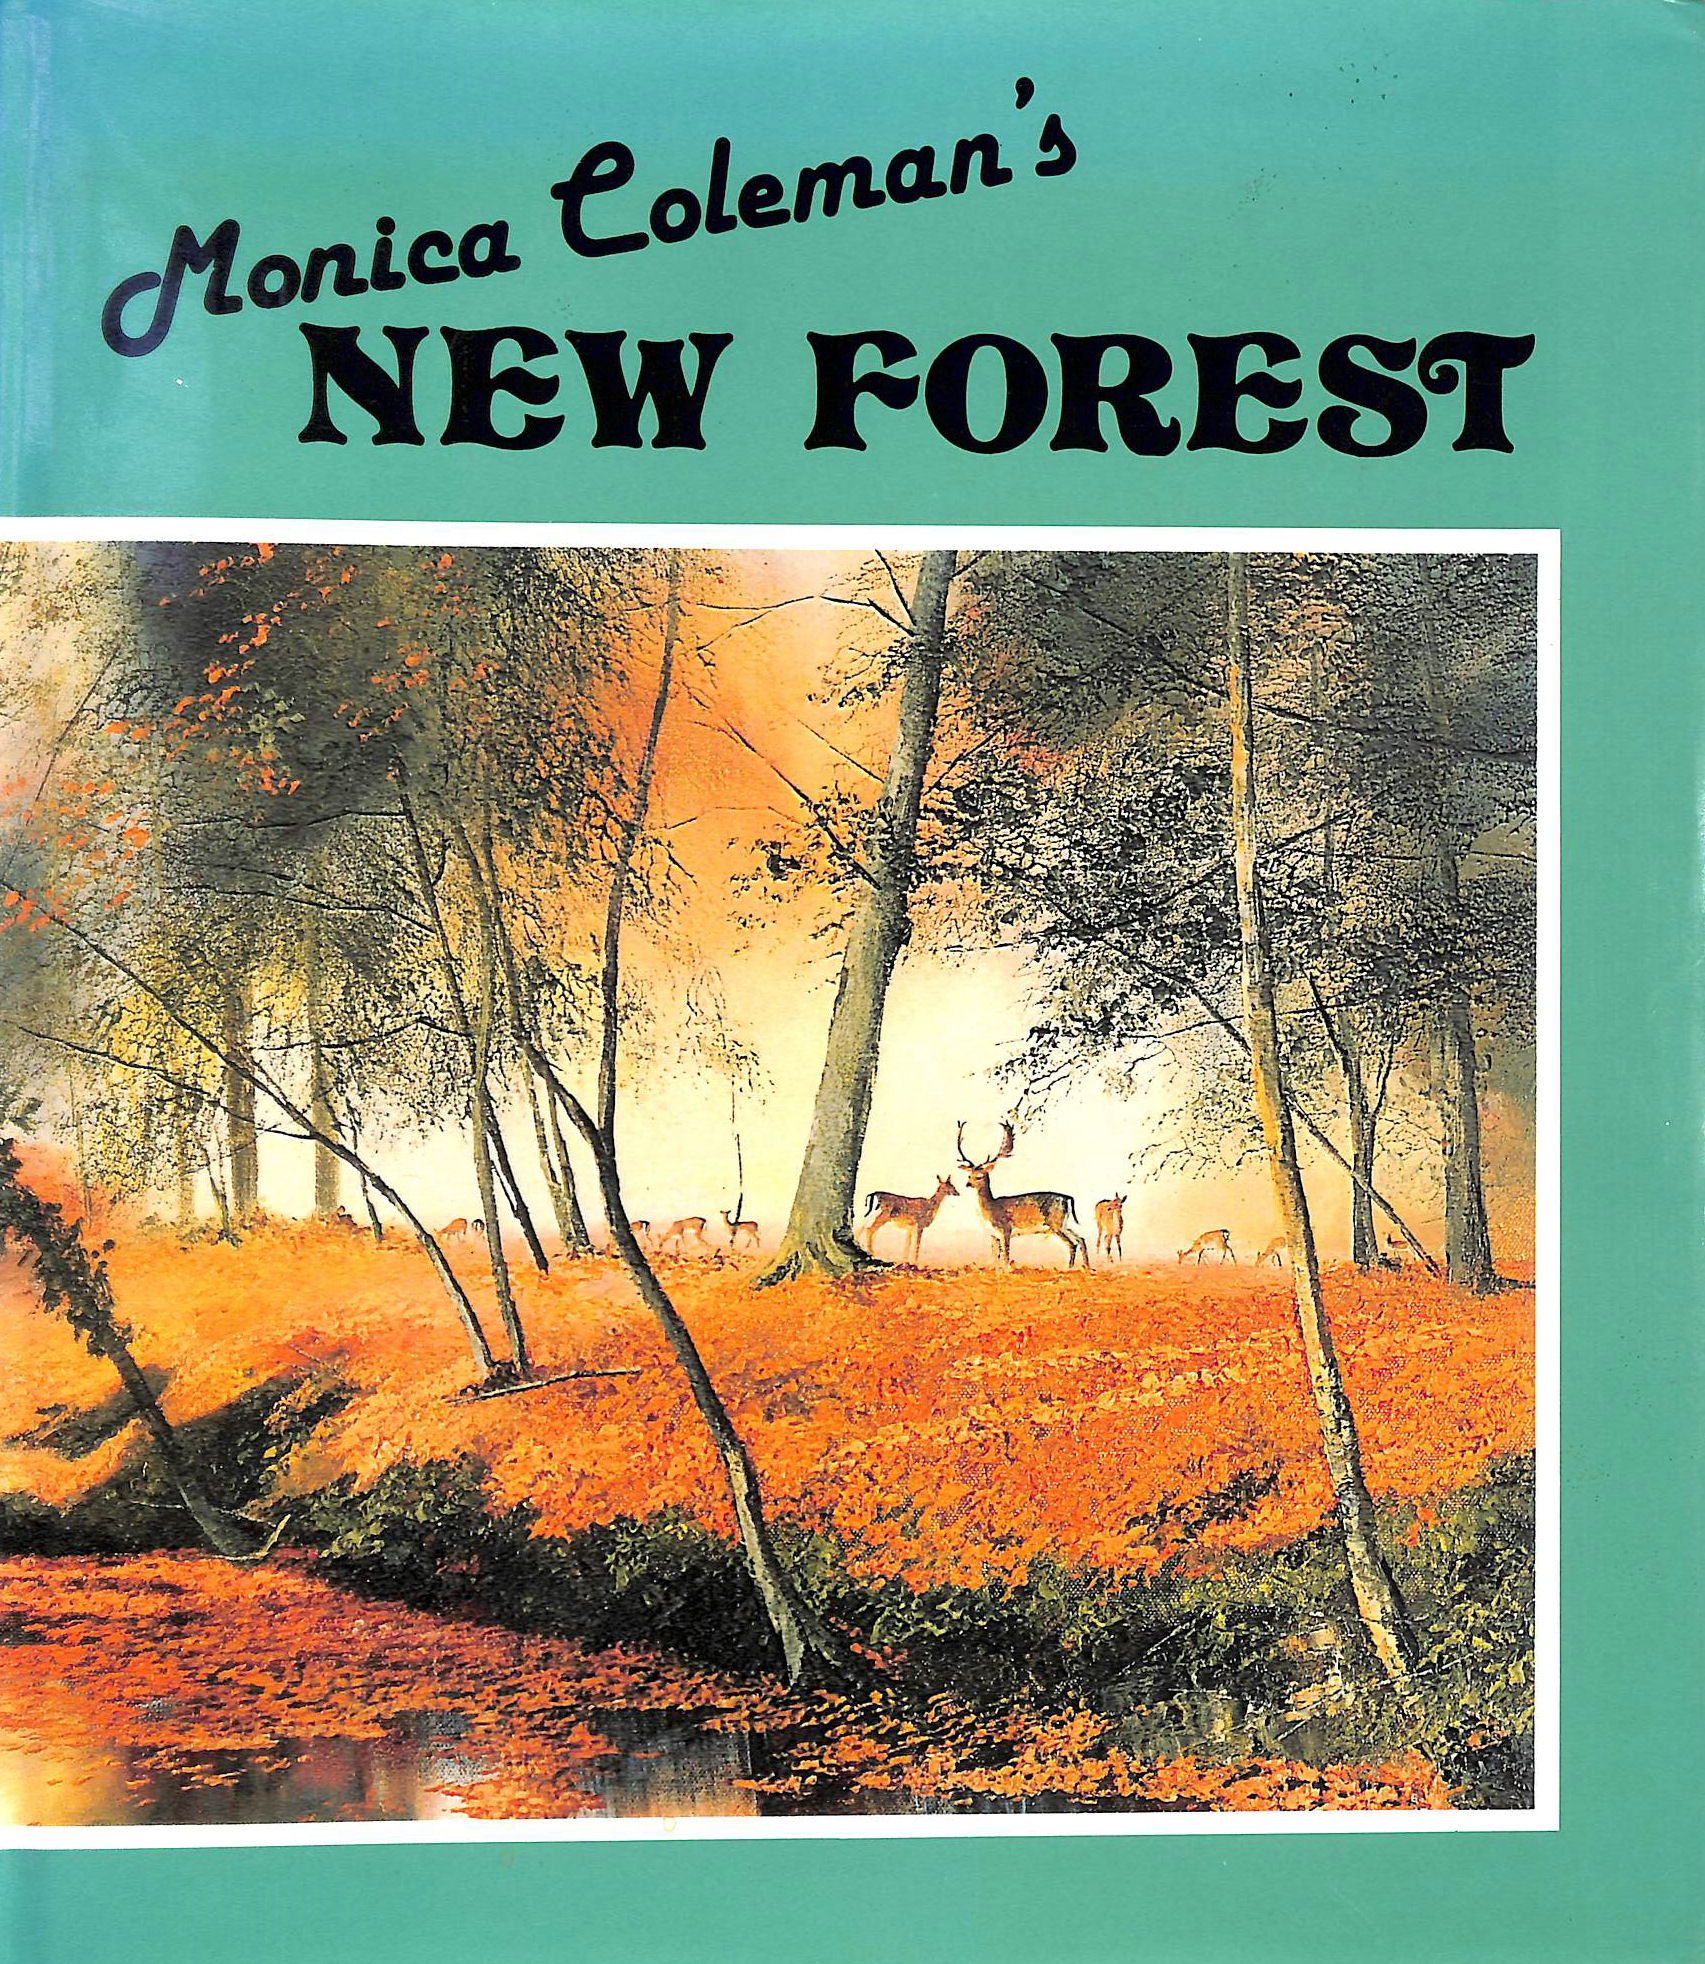 MONICA COLEMAN - Monica Coleman's New Forest